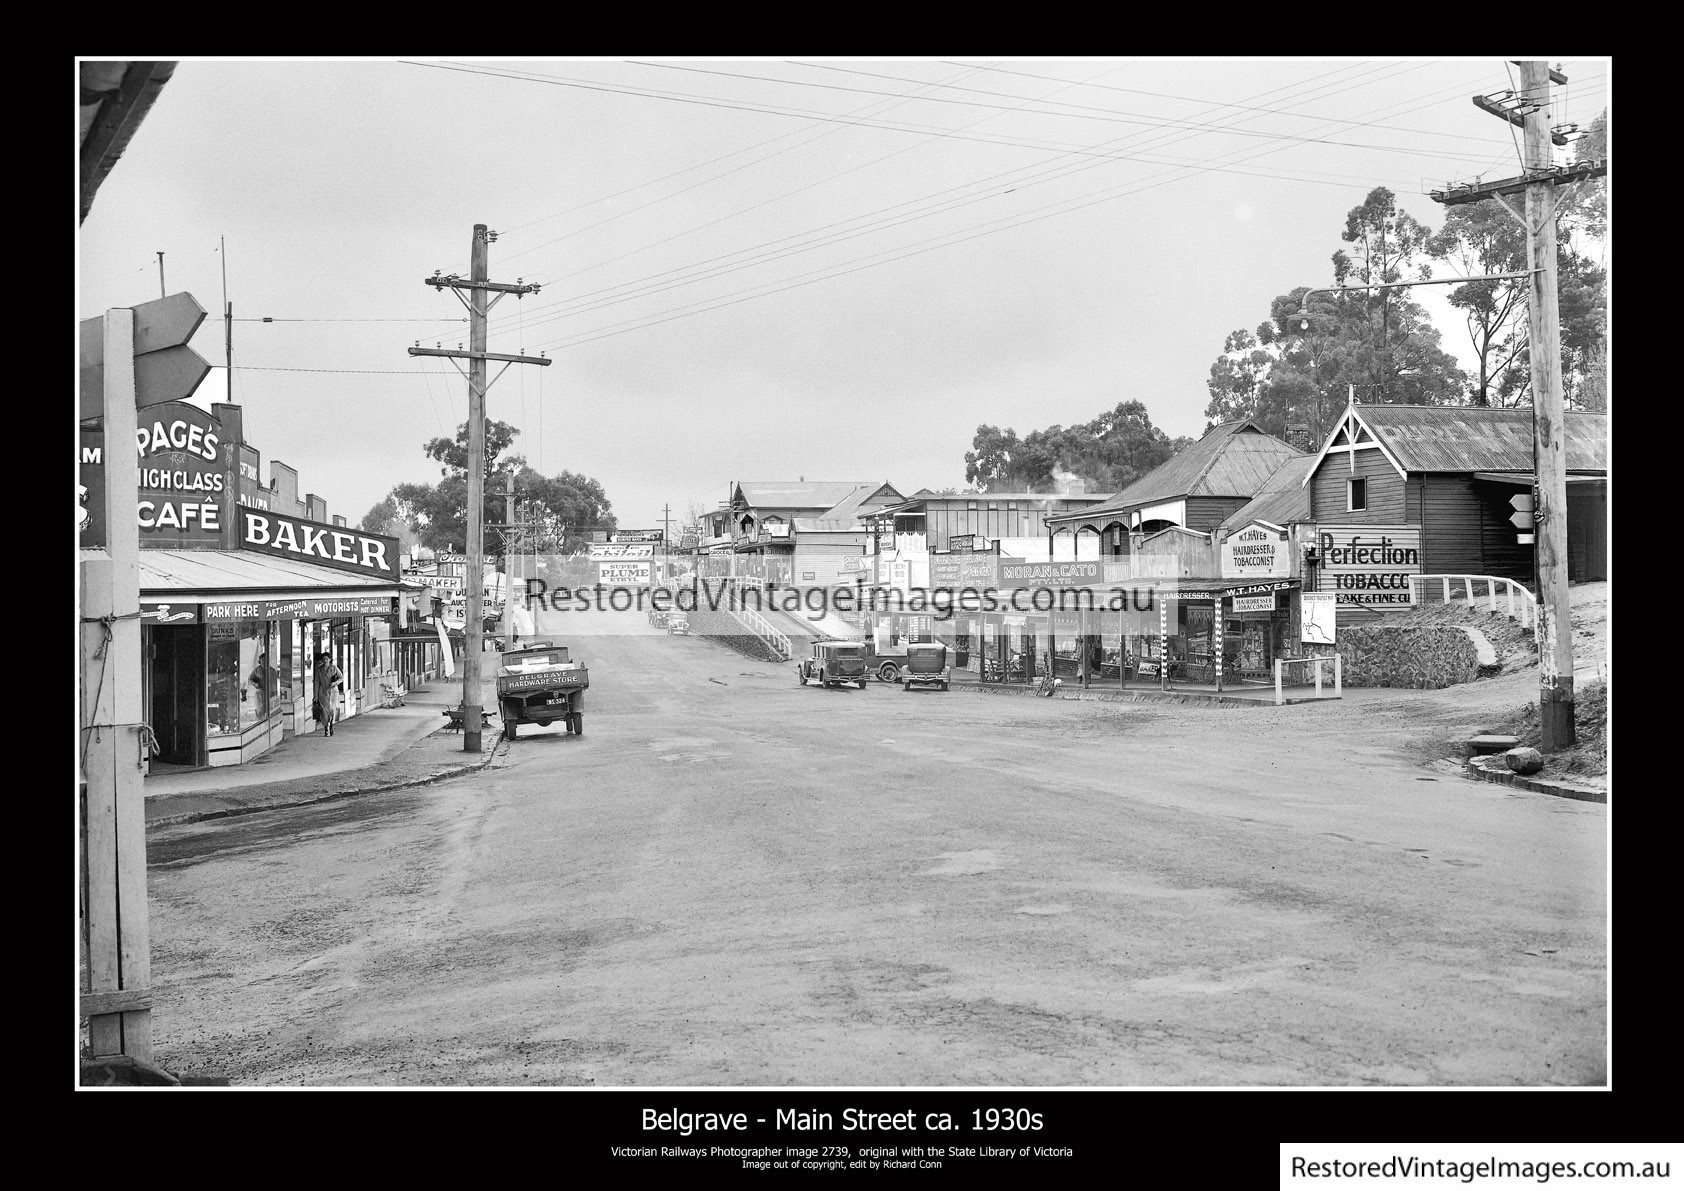 Belgrave – Main Street Looking South West 1930s